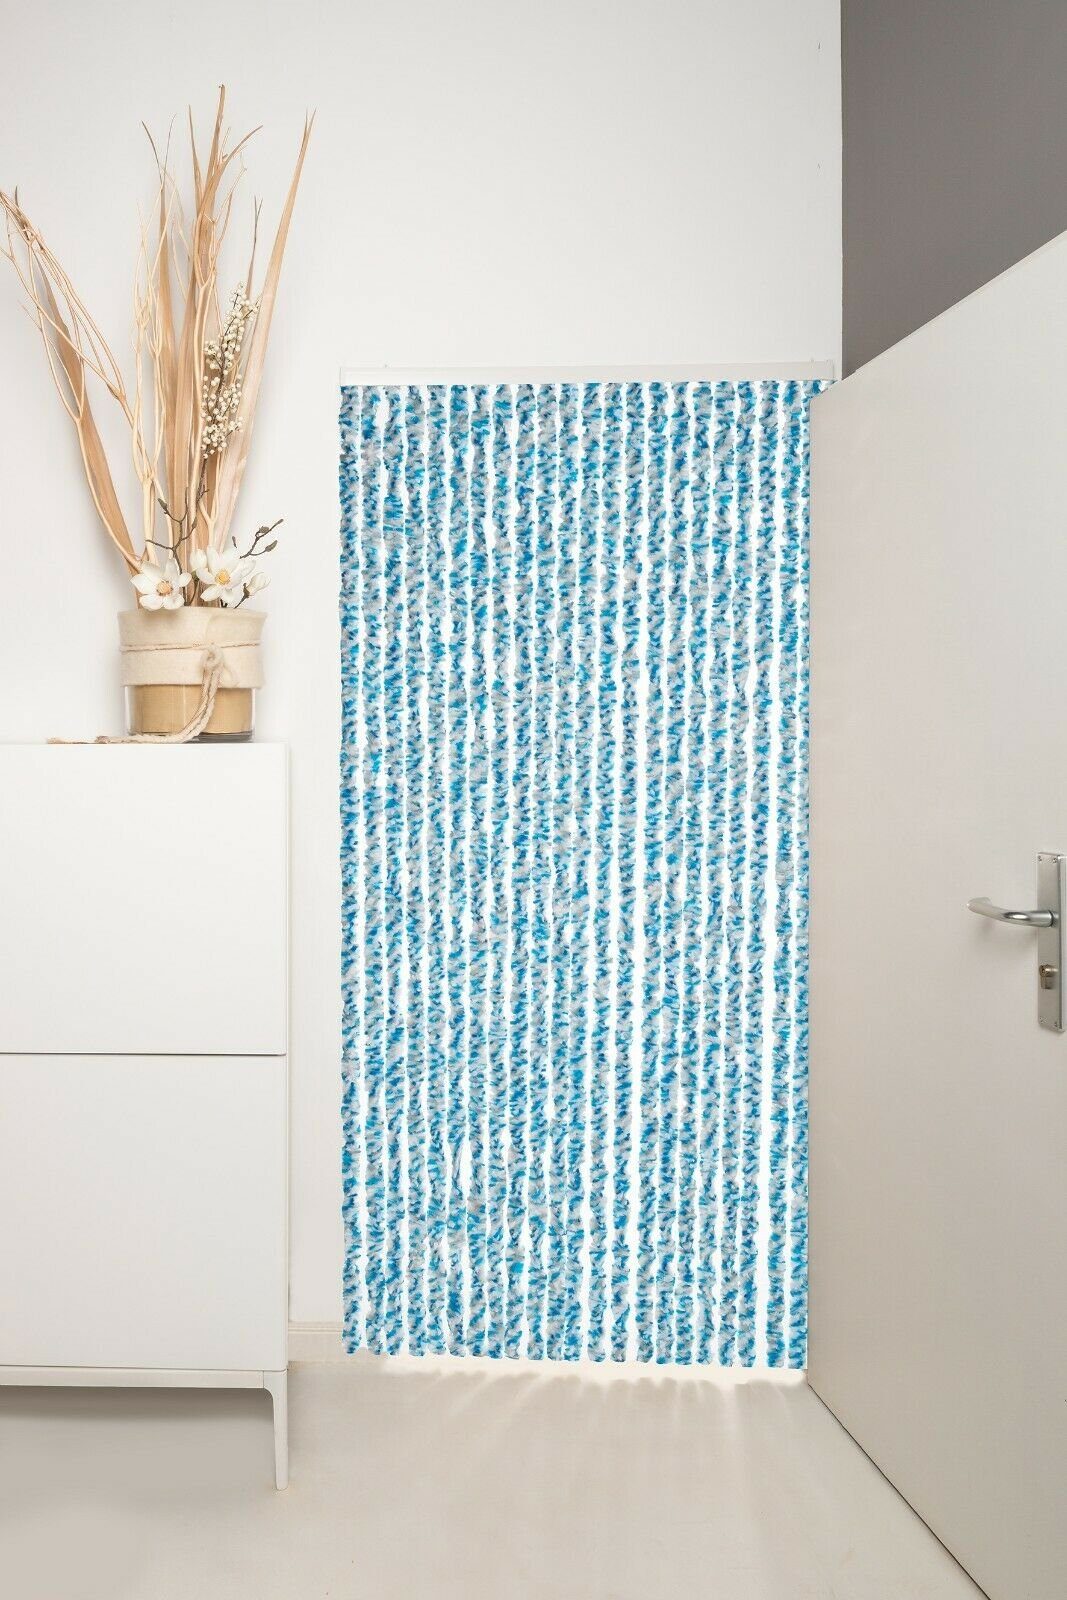 Insektenschutz-Vorhang 100x200cm Türvorhang Fliegenschutz Defactoshop Blau/Weiß Flauschvorhang